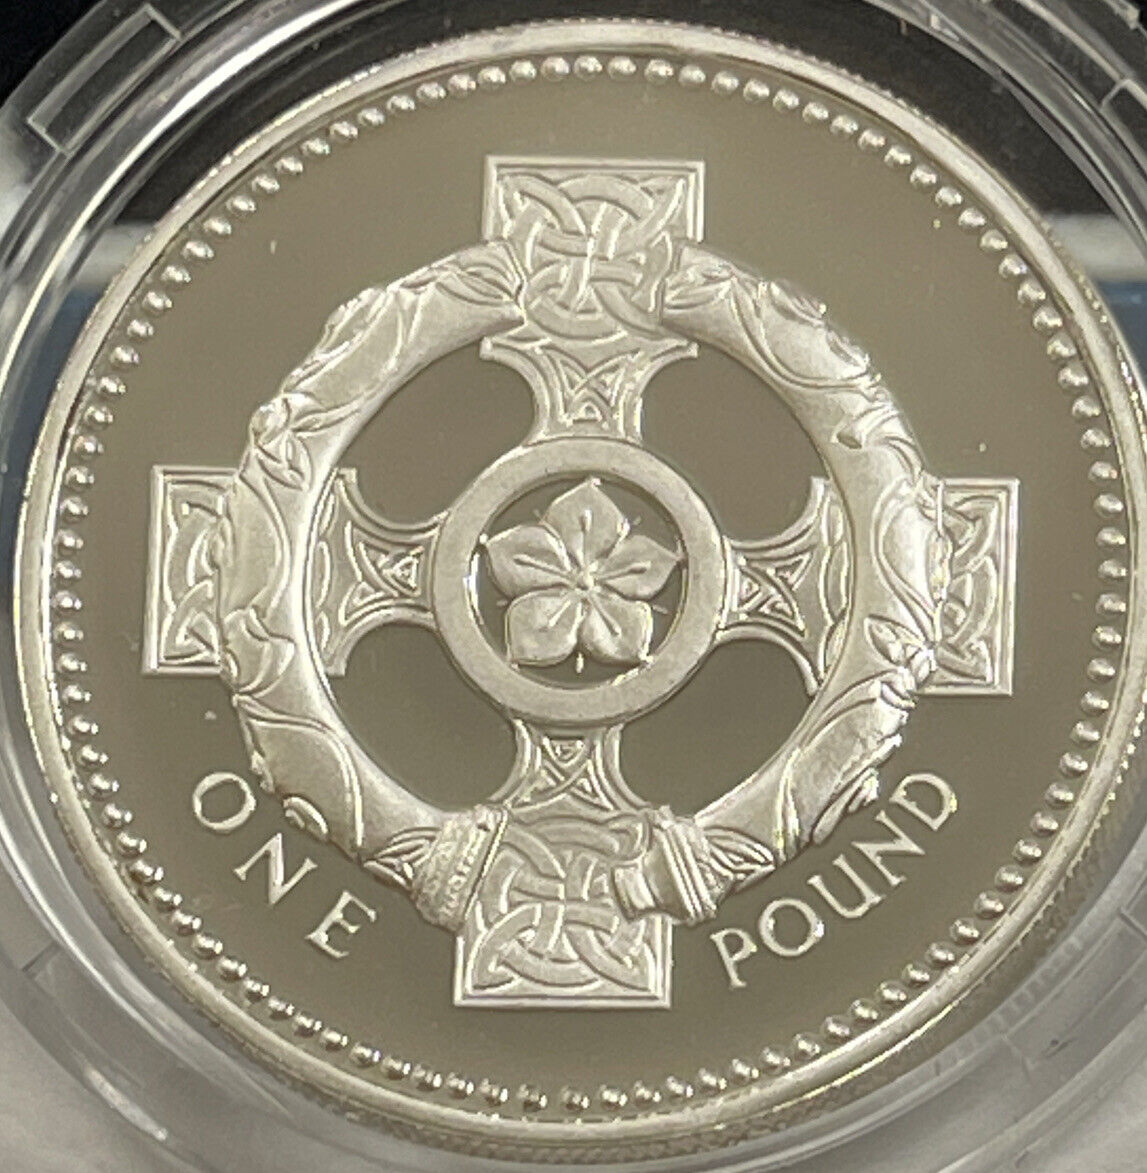 1996 United Kingdom Silver Proof - Irish Cross - One Pound Coin W/ Box And Coa